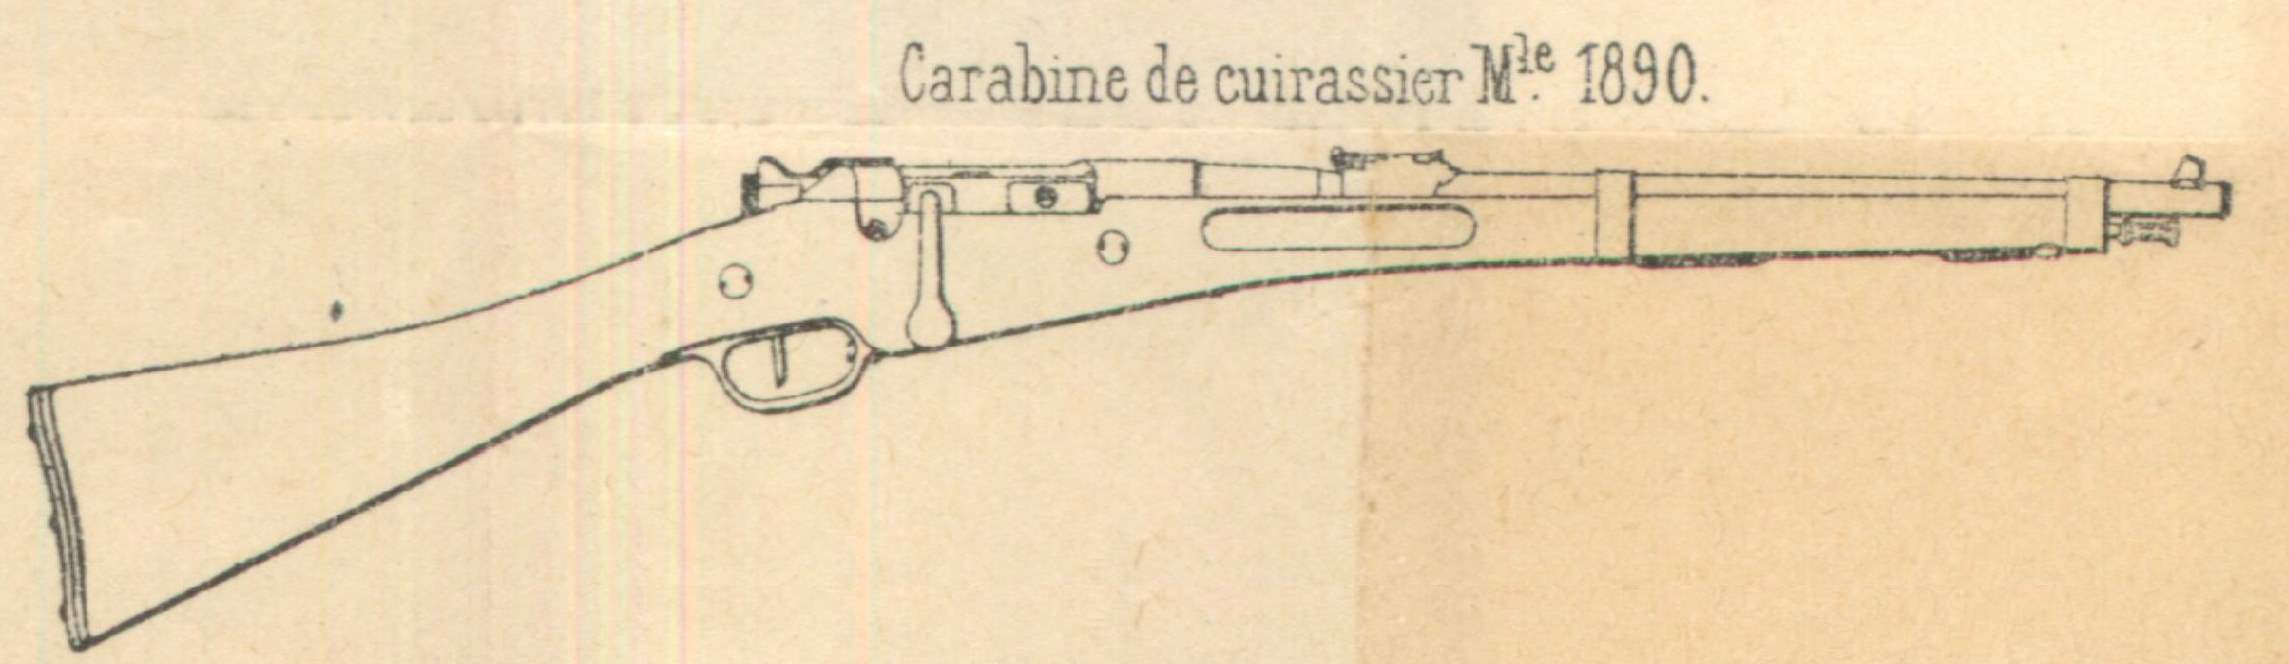 Carabine de cuirassier Mle 1890